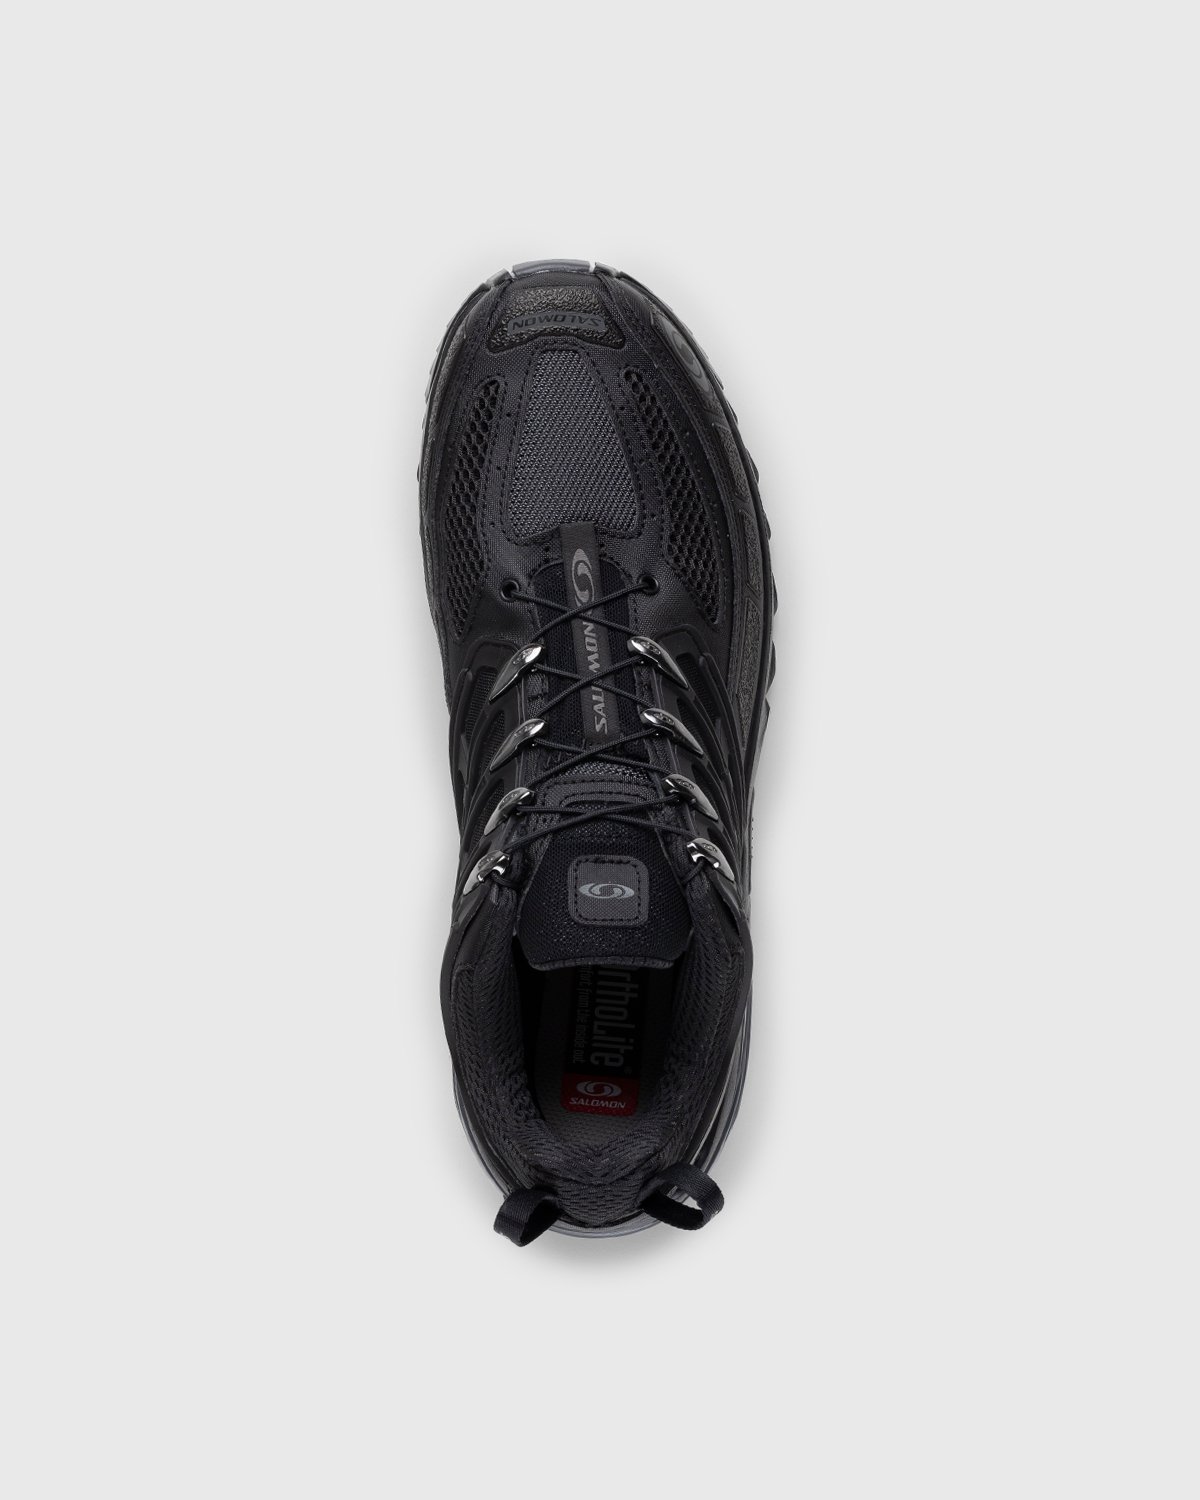 Salomon - ACS PRO Black/Black/Black - Low Top Sneakers - Black - Image 5